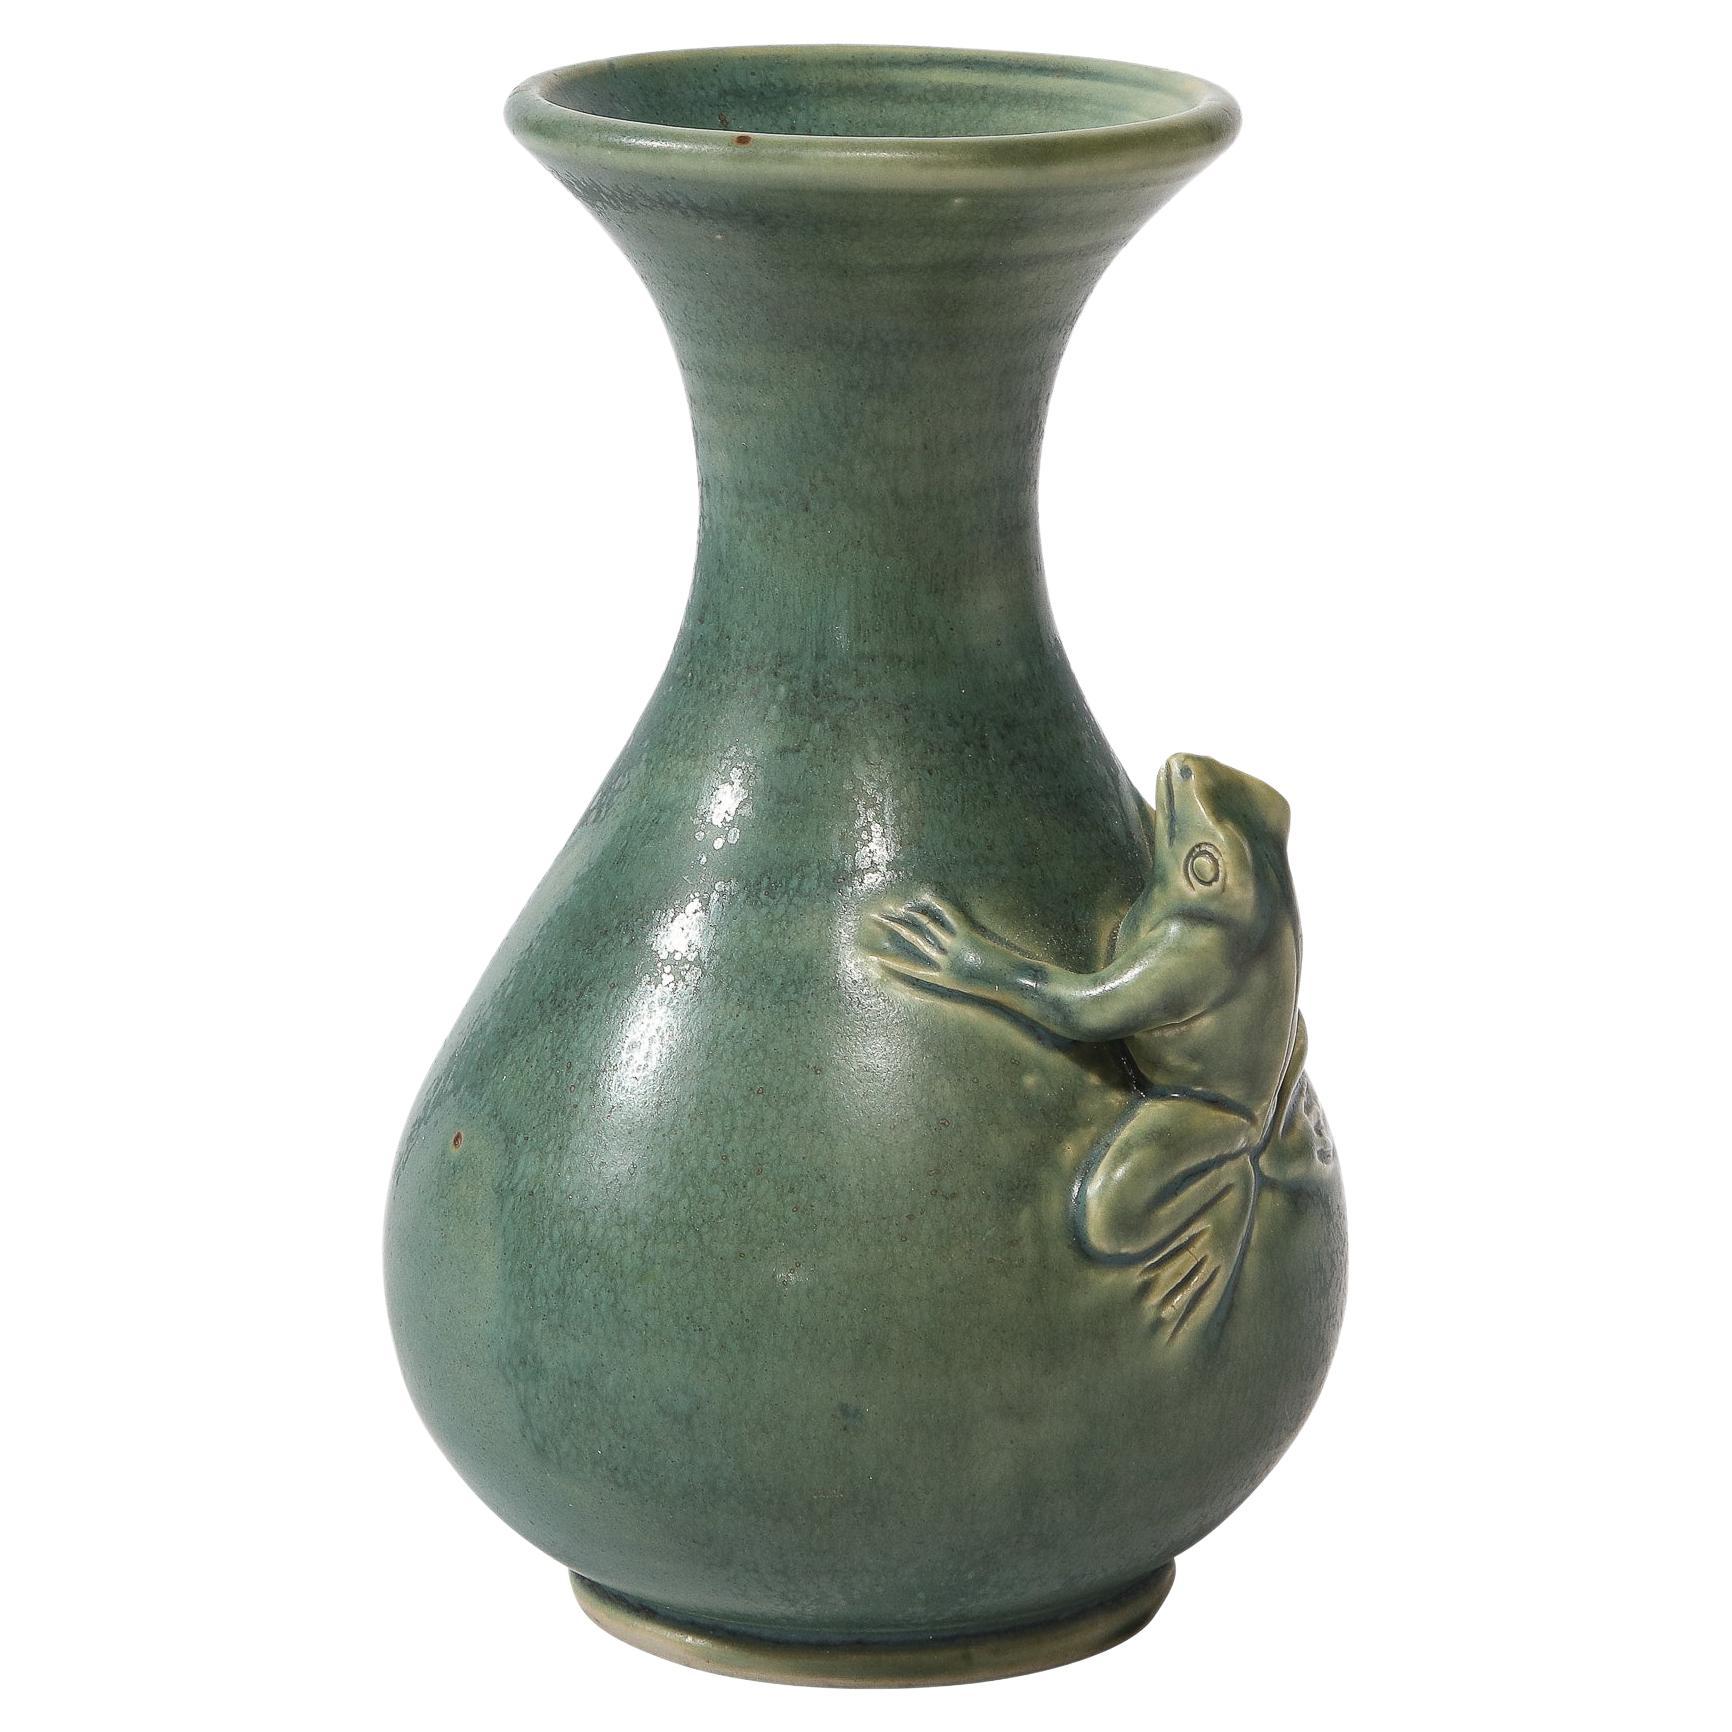 Modernist Sculptural Muted Jade Glazed Ceramic Vase with Frog Motif in Relief